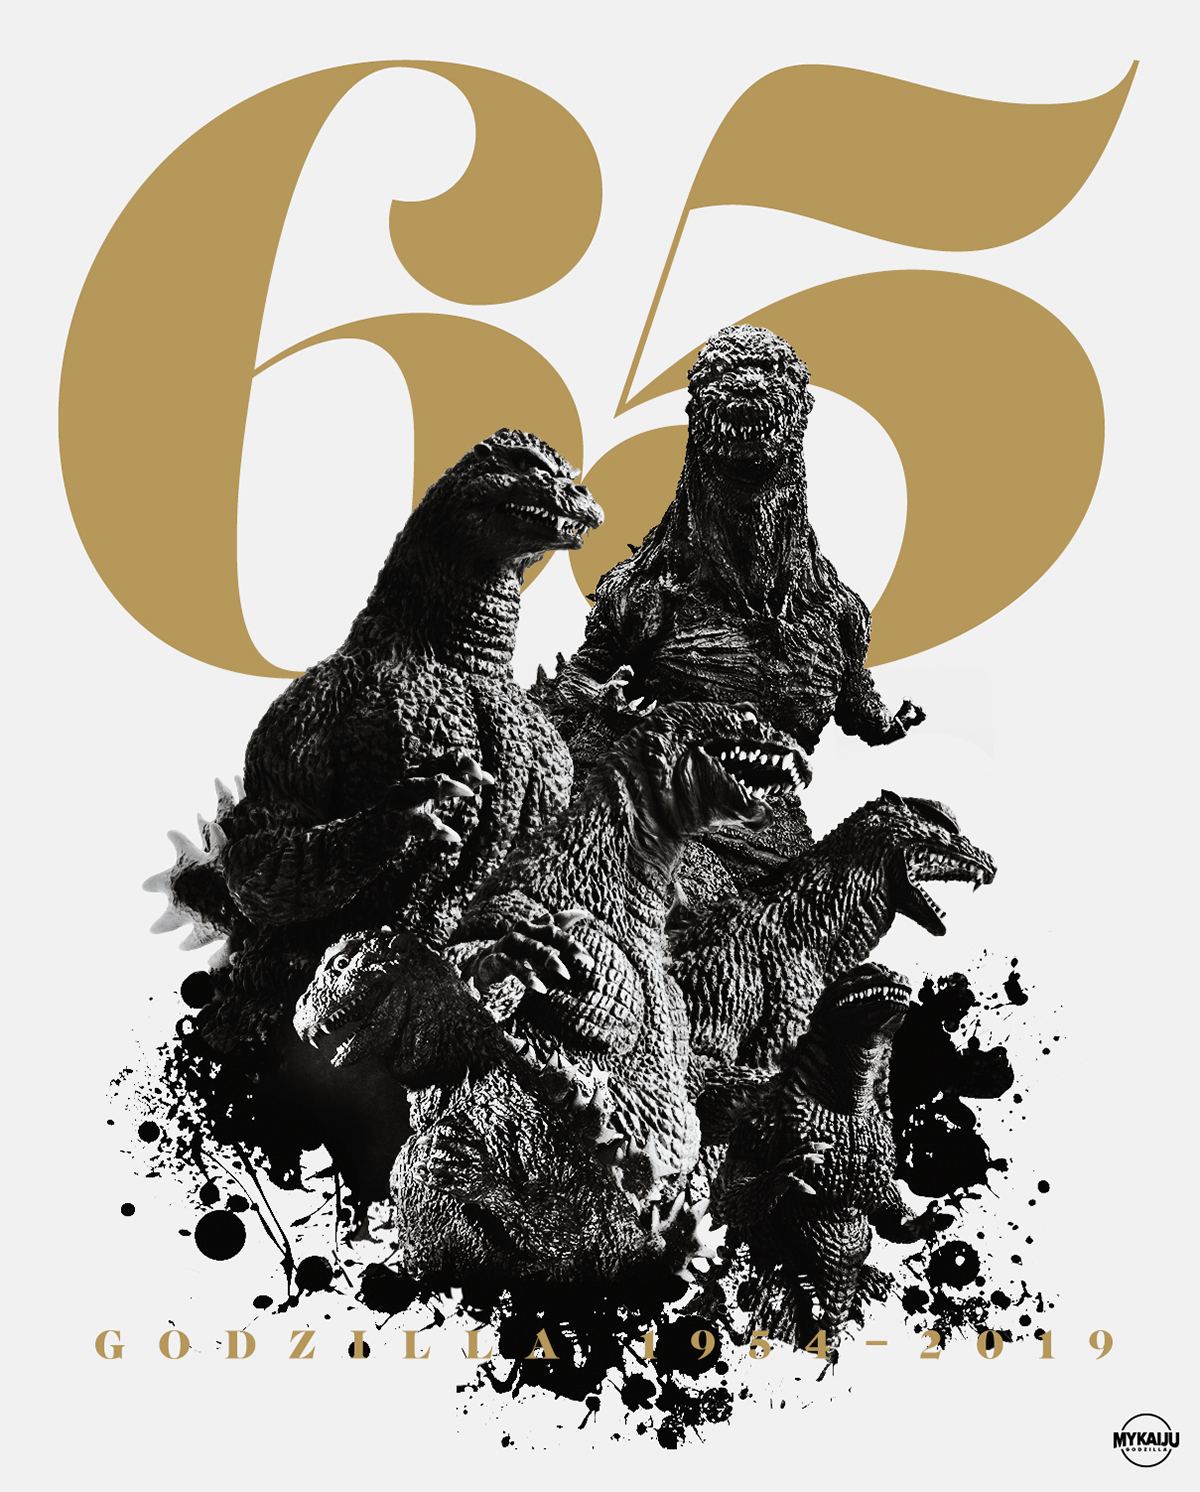 65th Anniversary of Godzilla